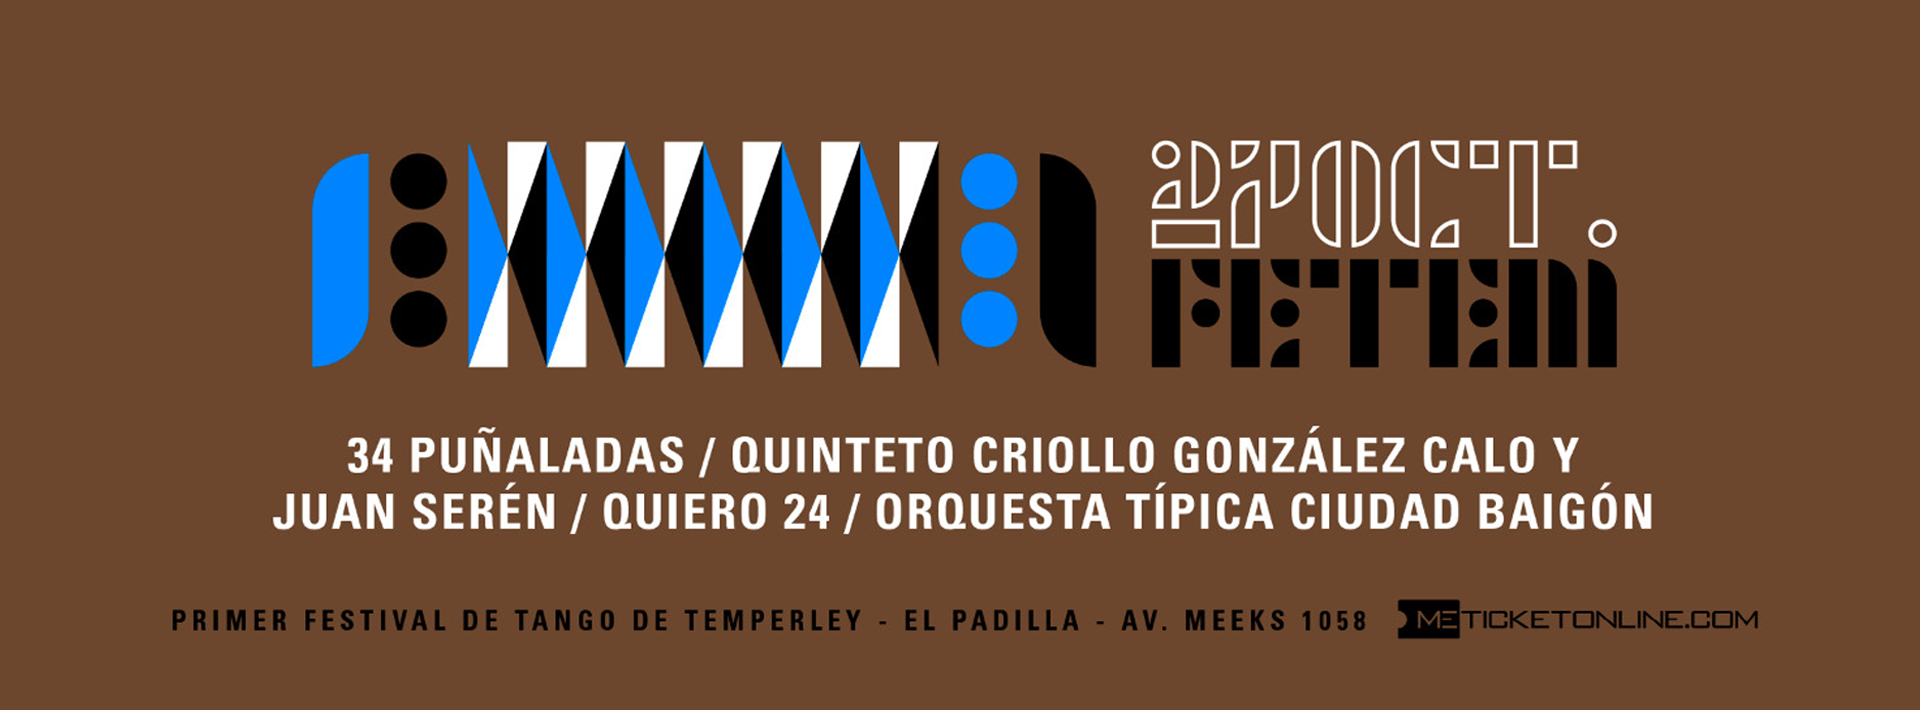 FESTIVAL DE TANGO DE TEMPERLEY -FETEM DIA 3